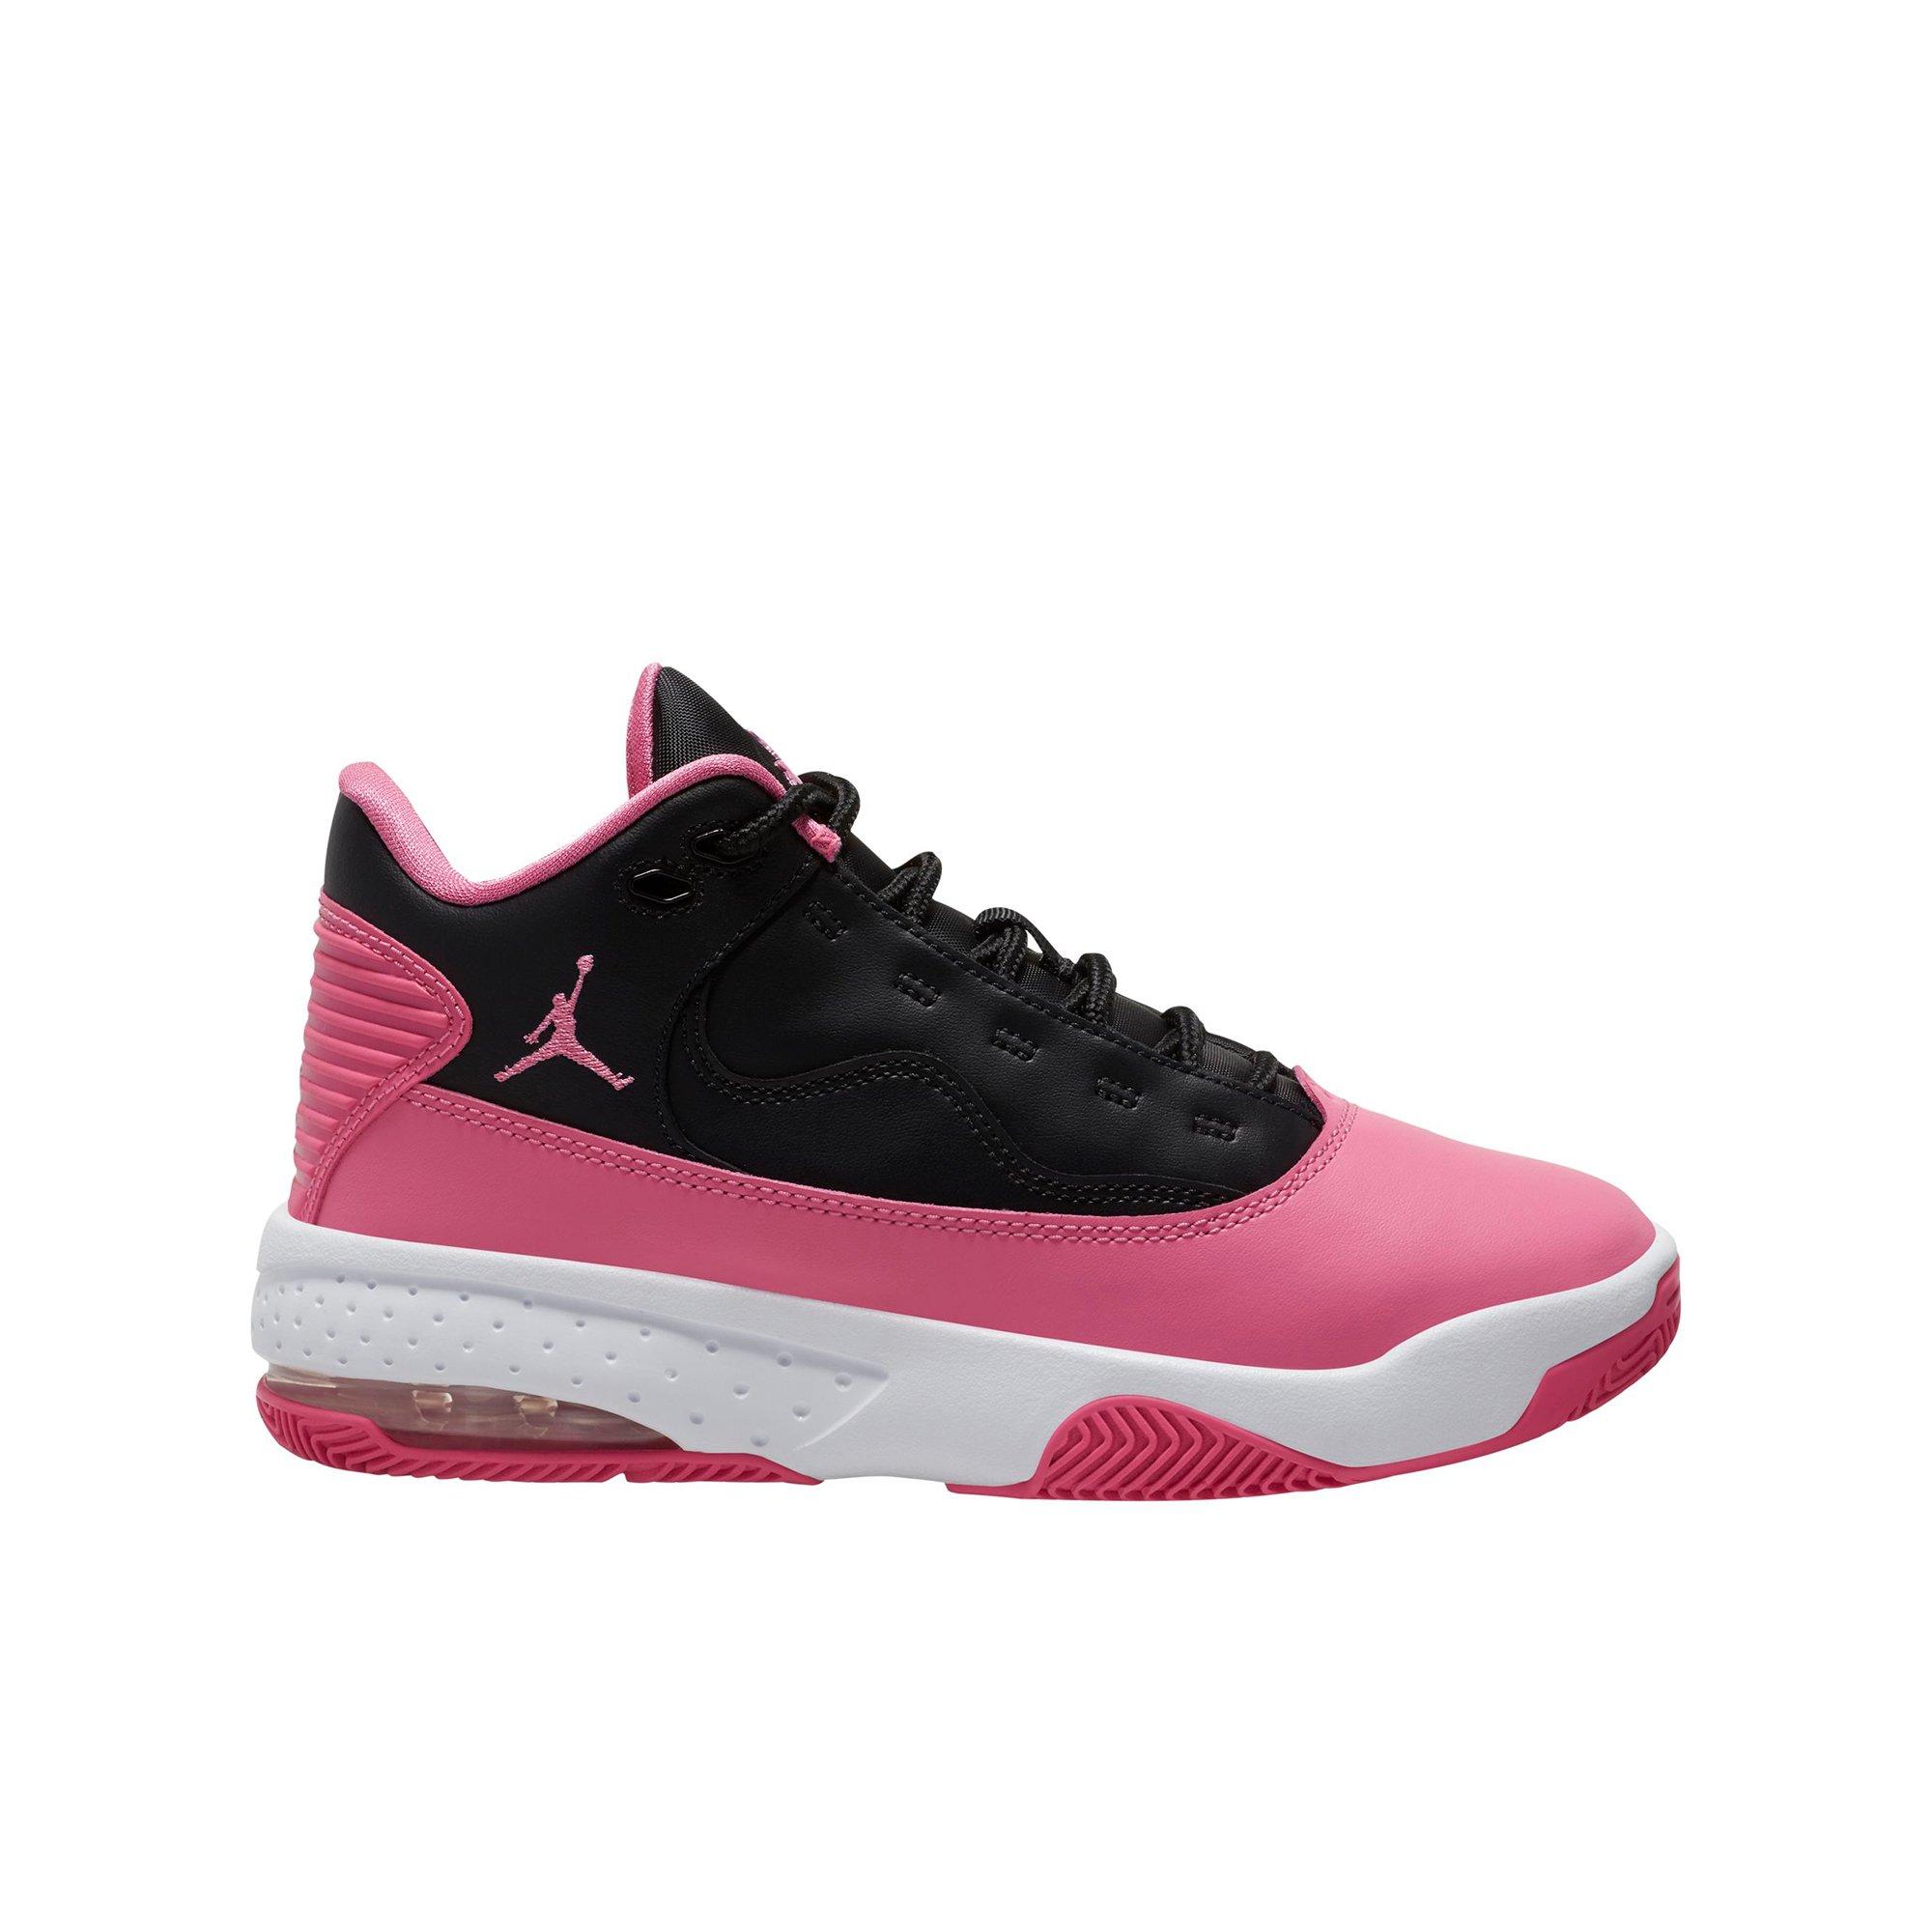 jordan shoes black and pink